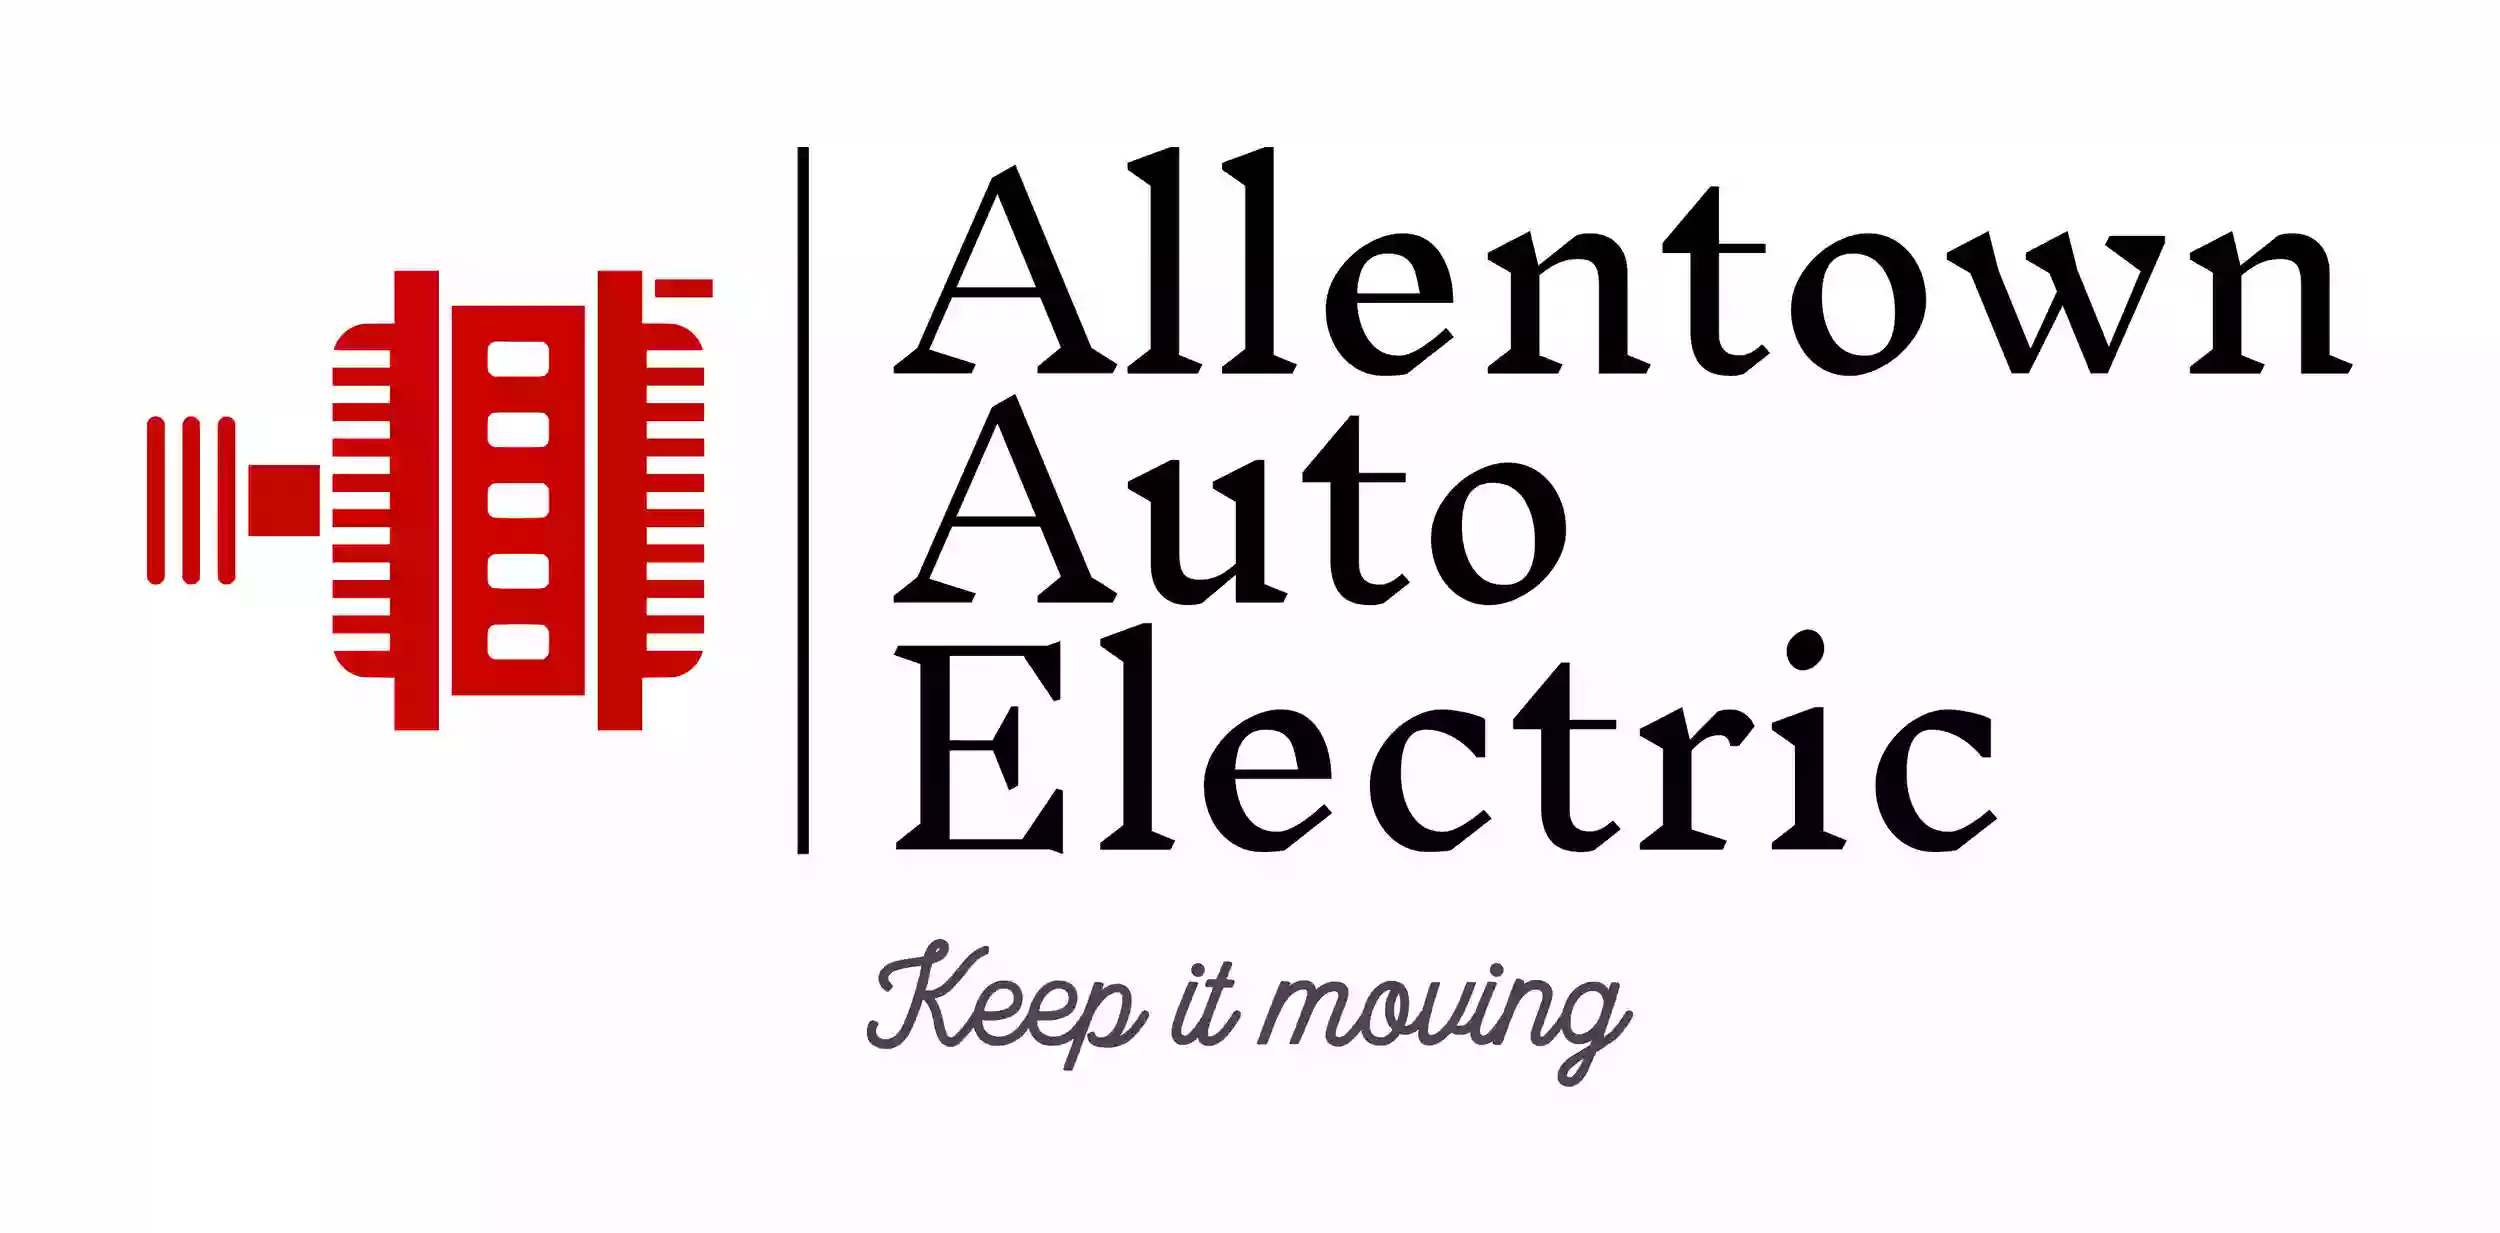 Allentown Auto Electric LLC